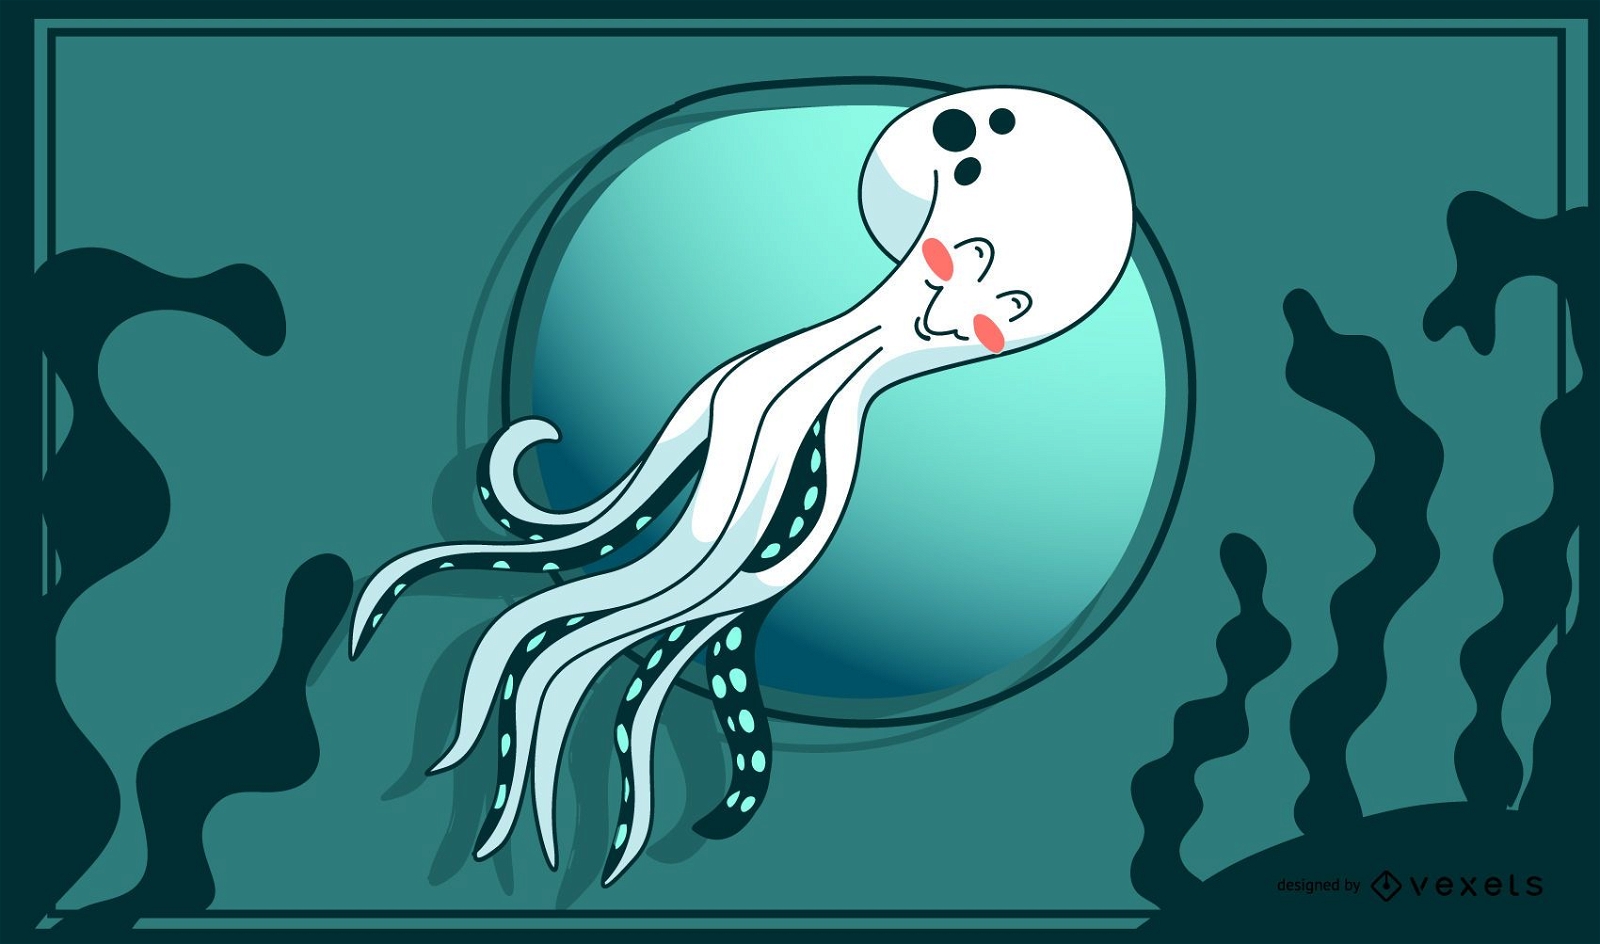 Nette Illustration des stilvollen Oktopus